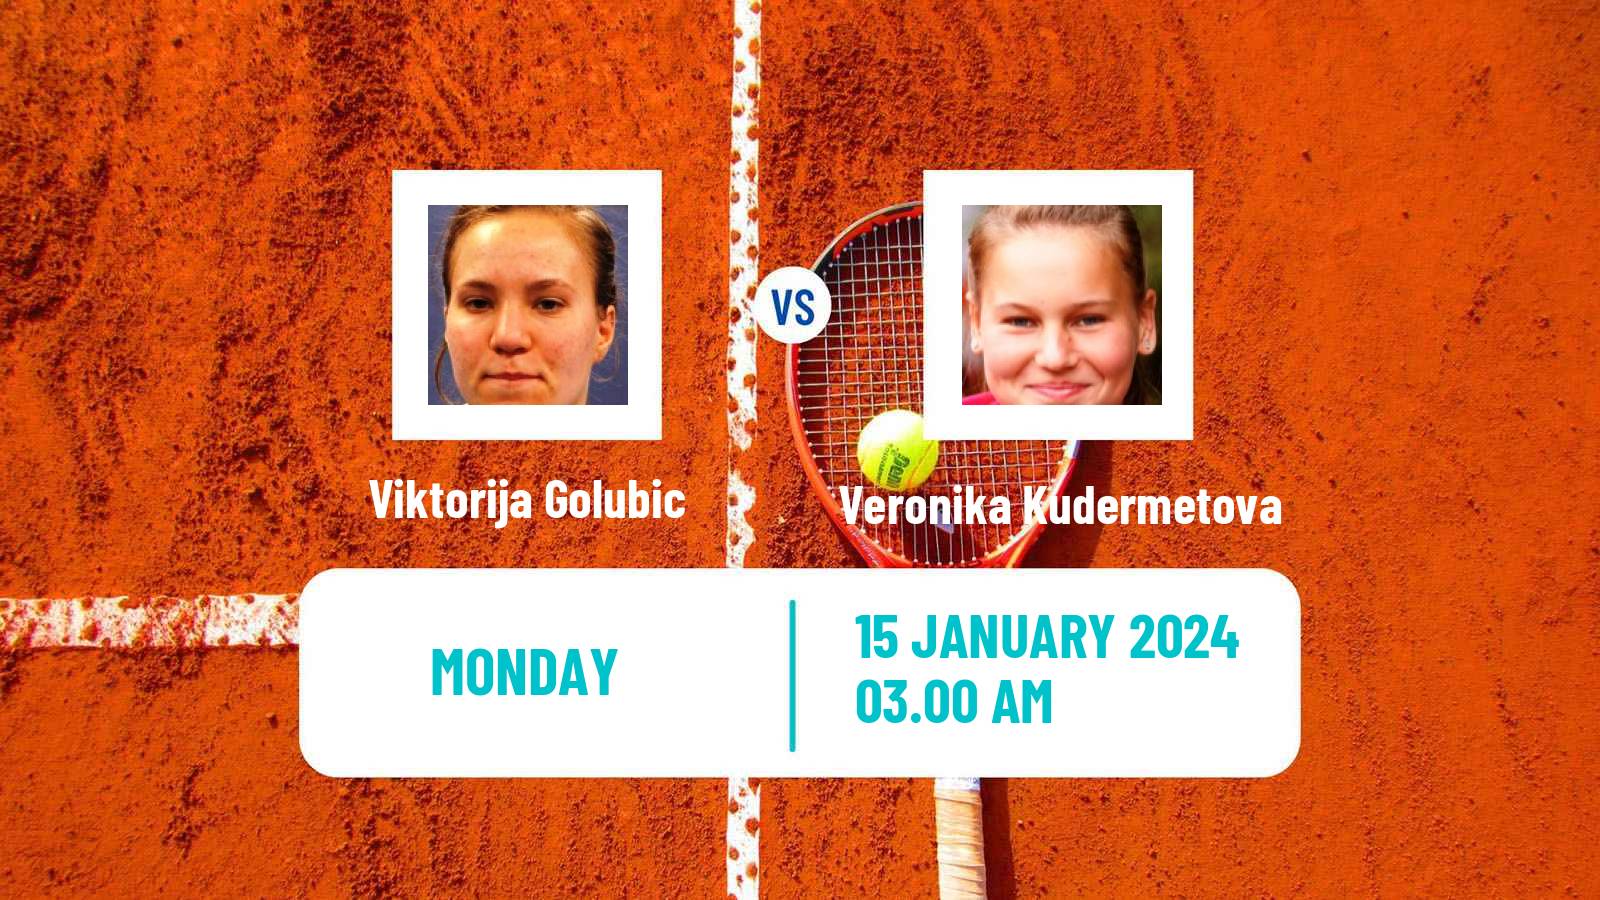 Tennis WTA Australian Open Viktorija Golubic - Veronika Kudermetova